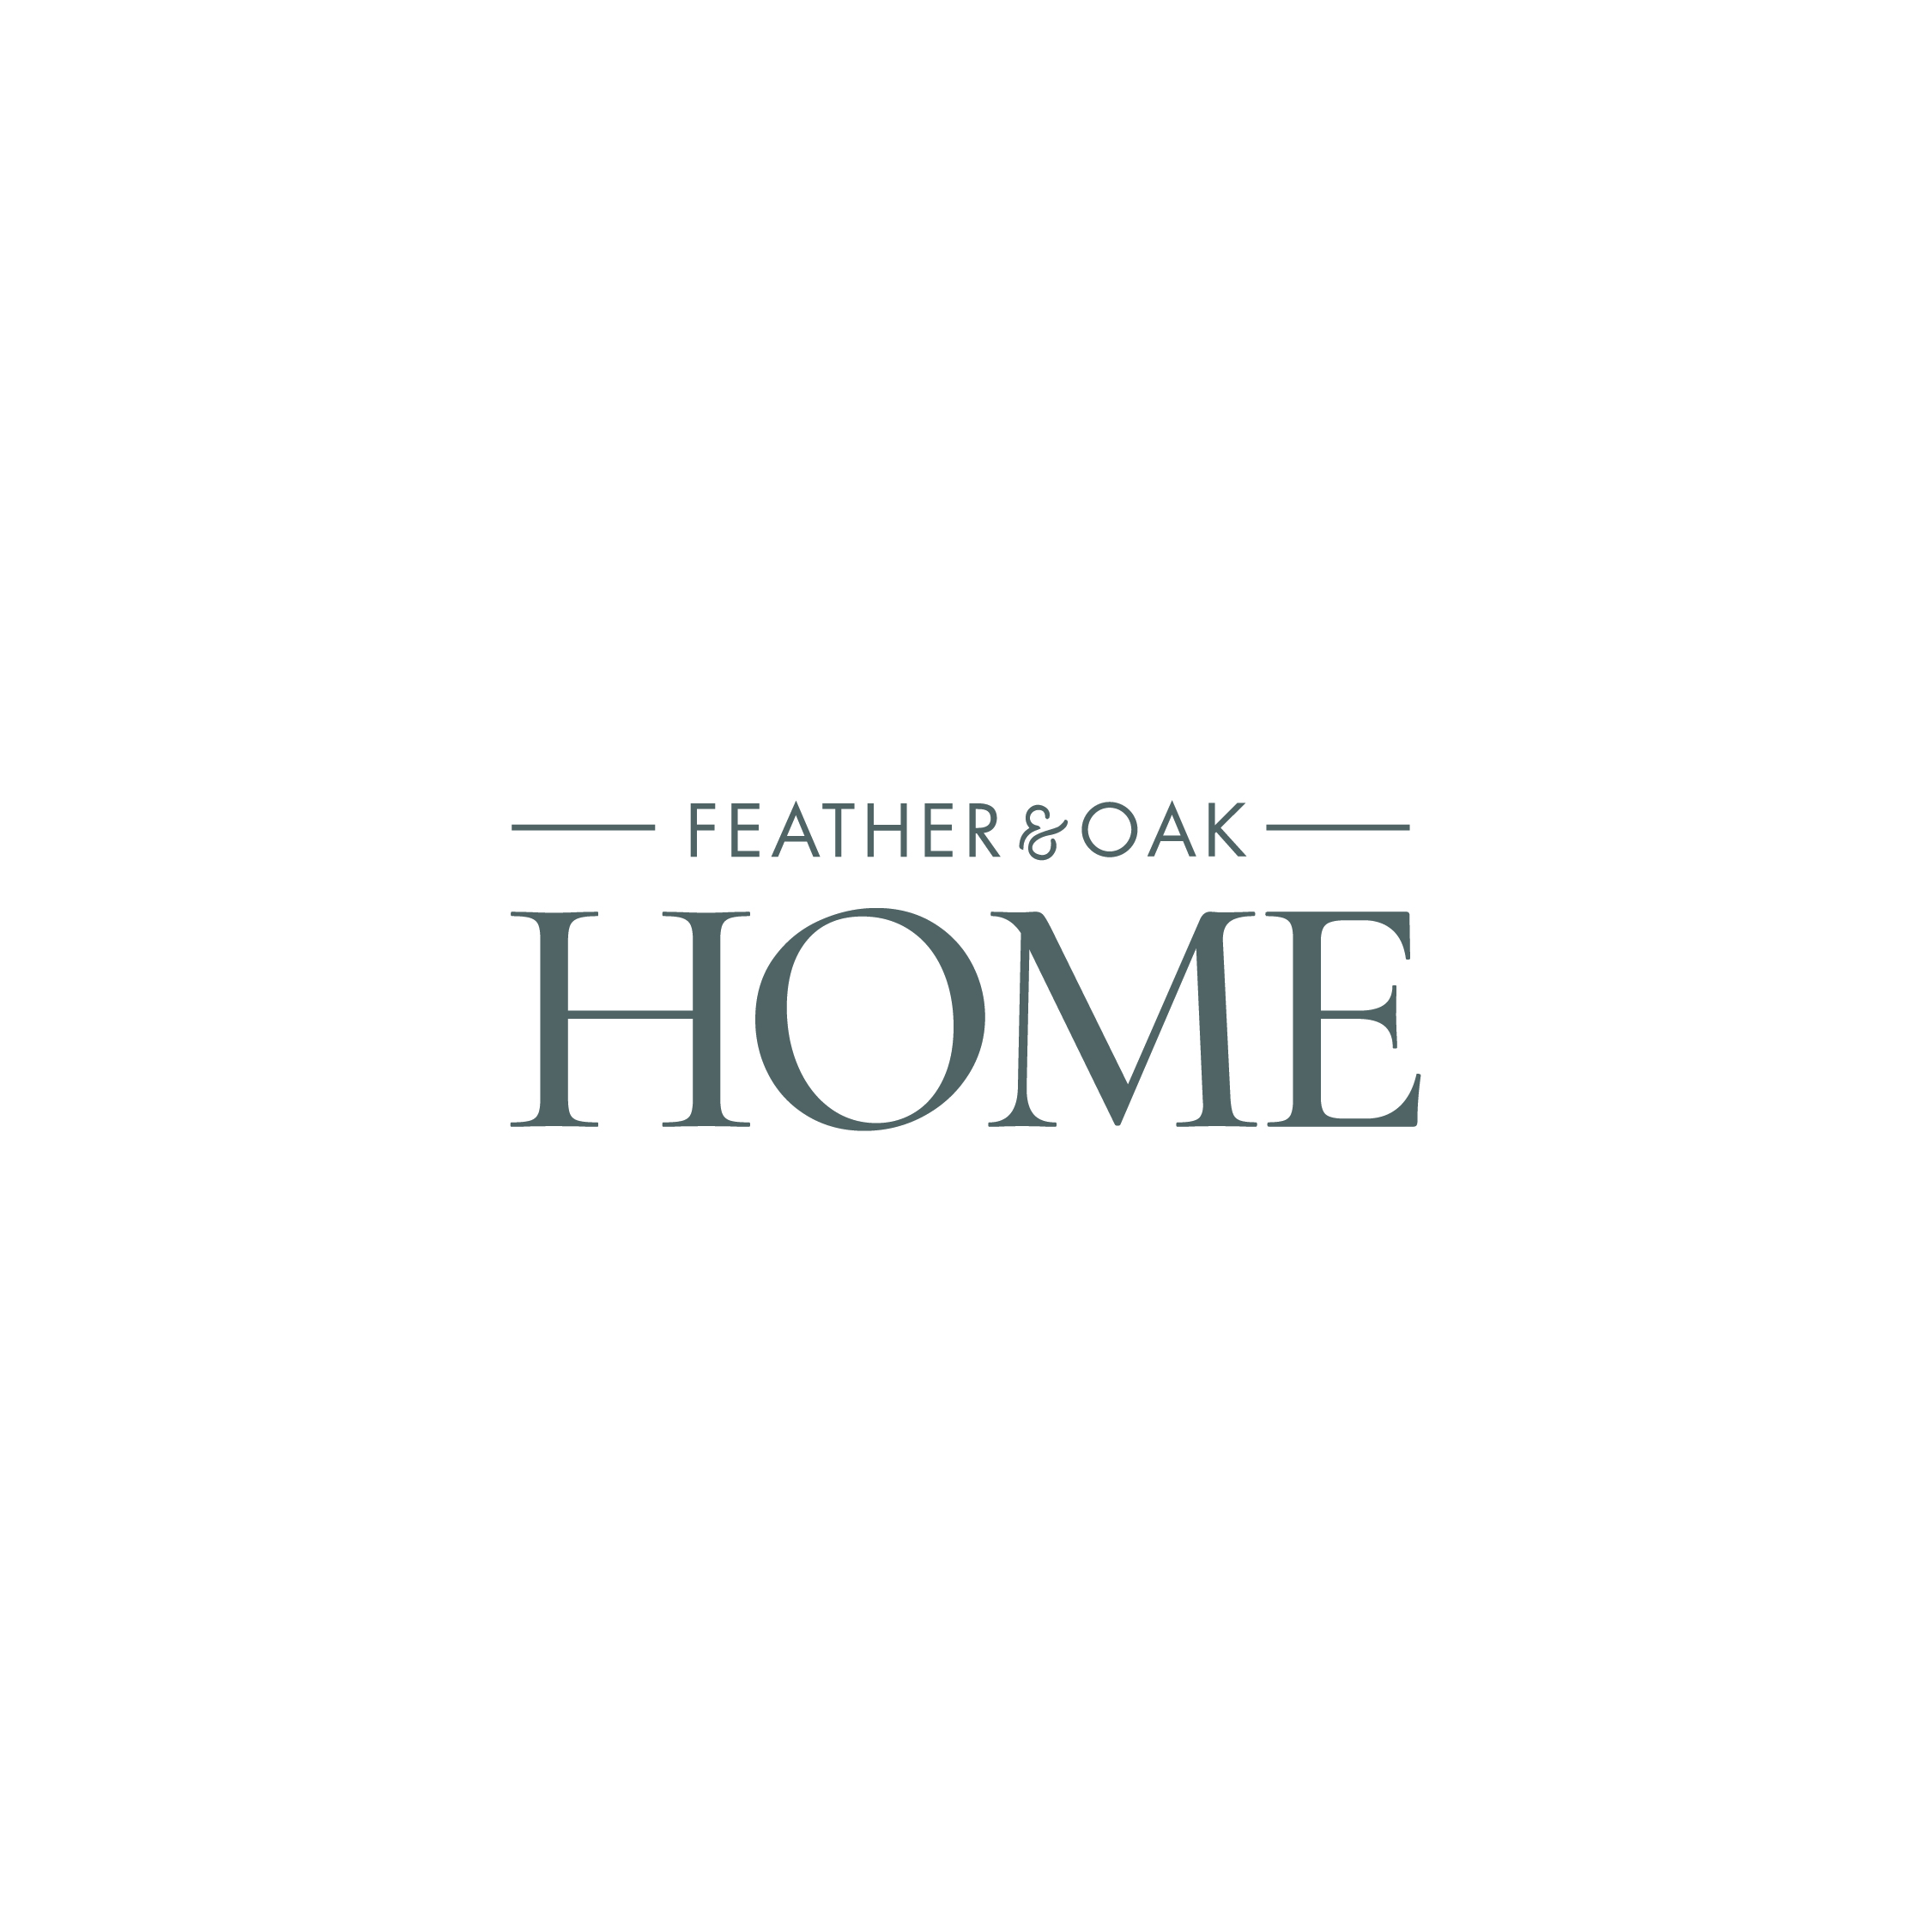 Feather & Oak Homes